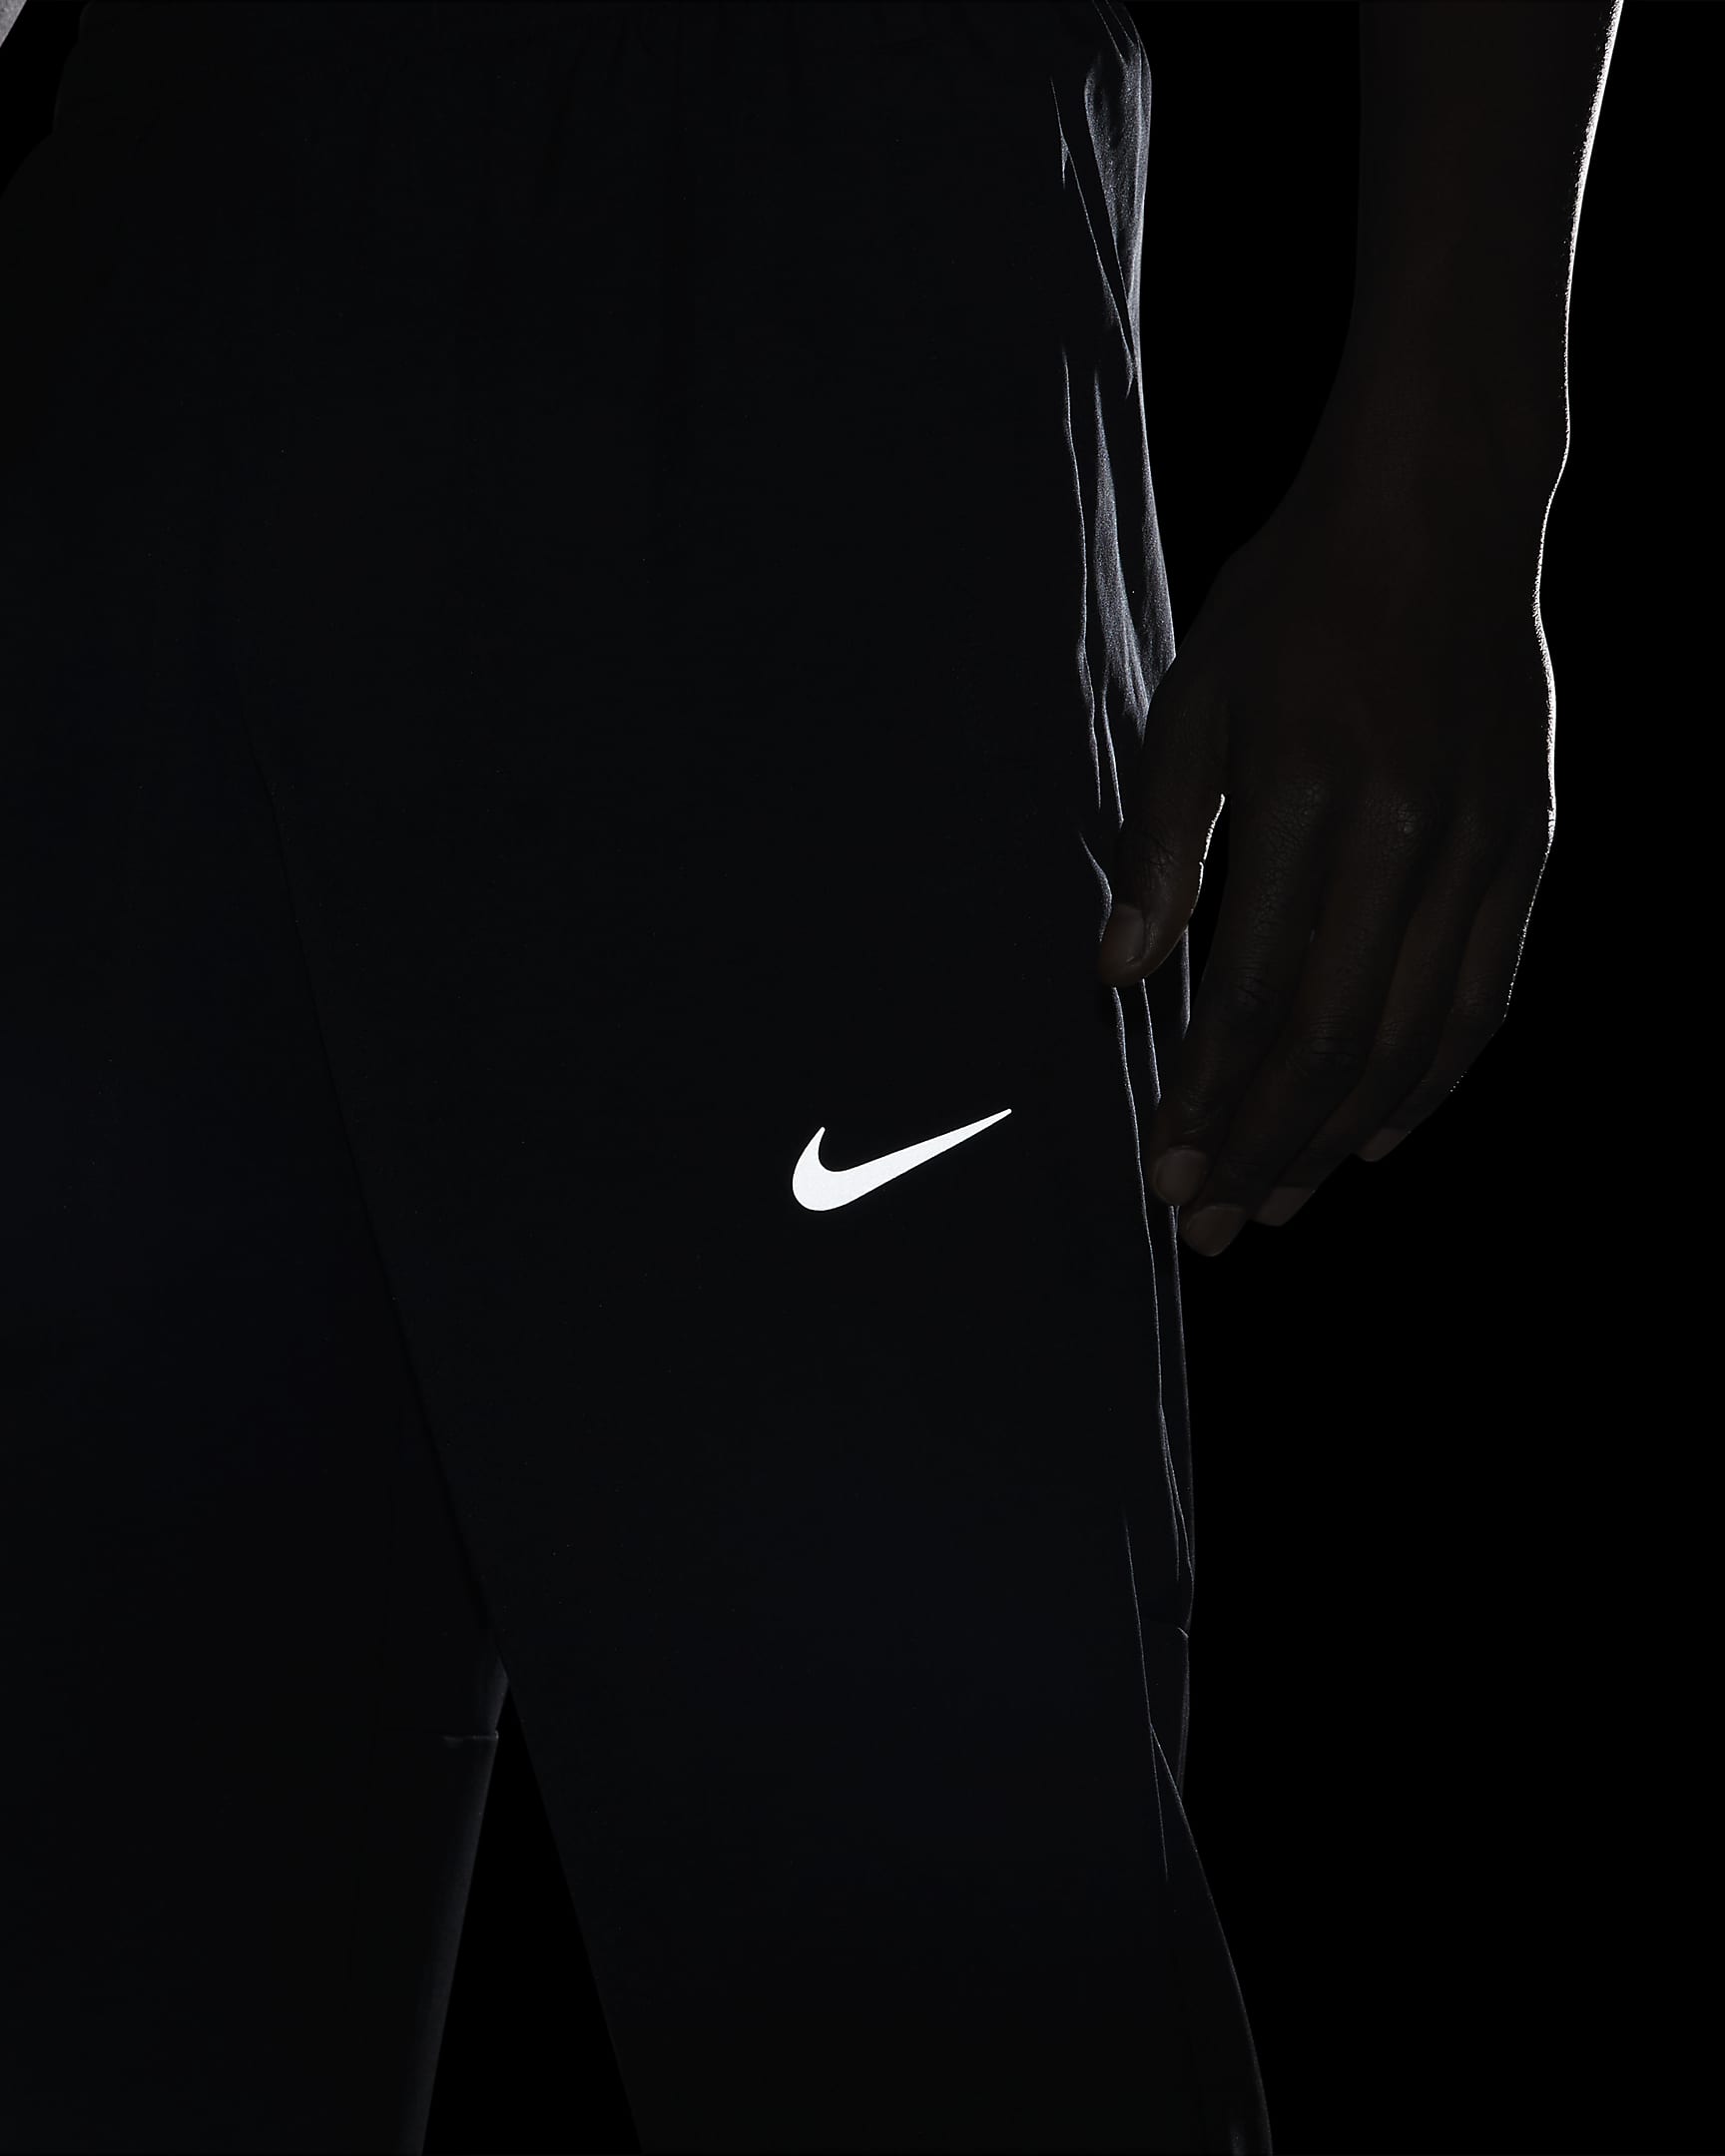 Nike Dri-FIT Challenger Men's Woven Running Trousers. Nike UK